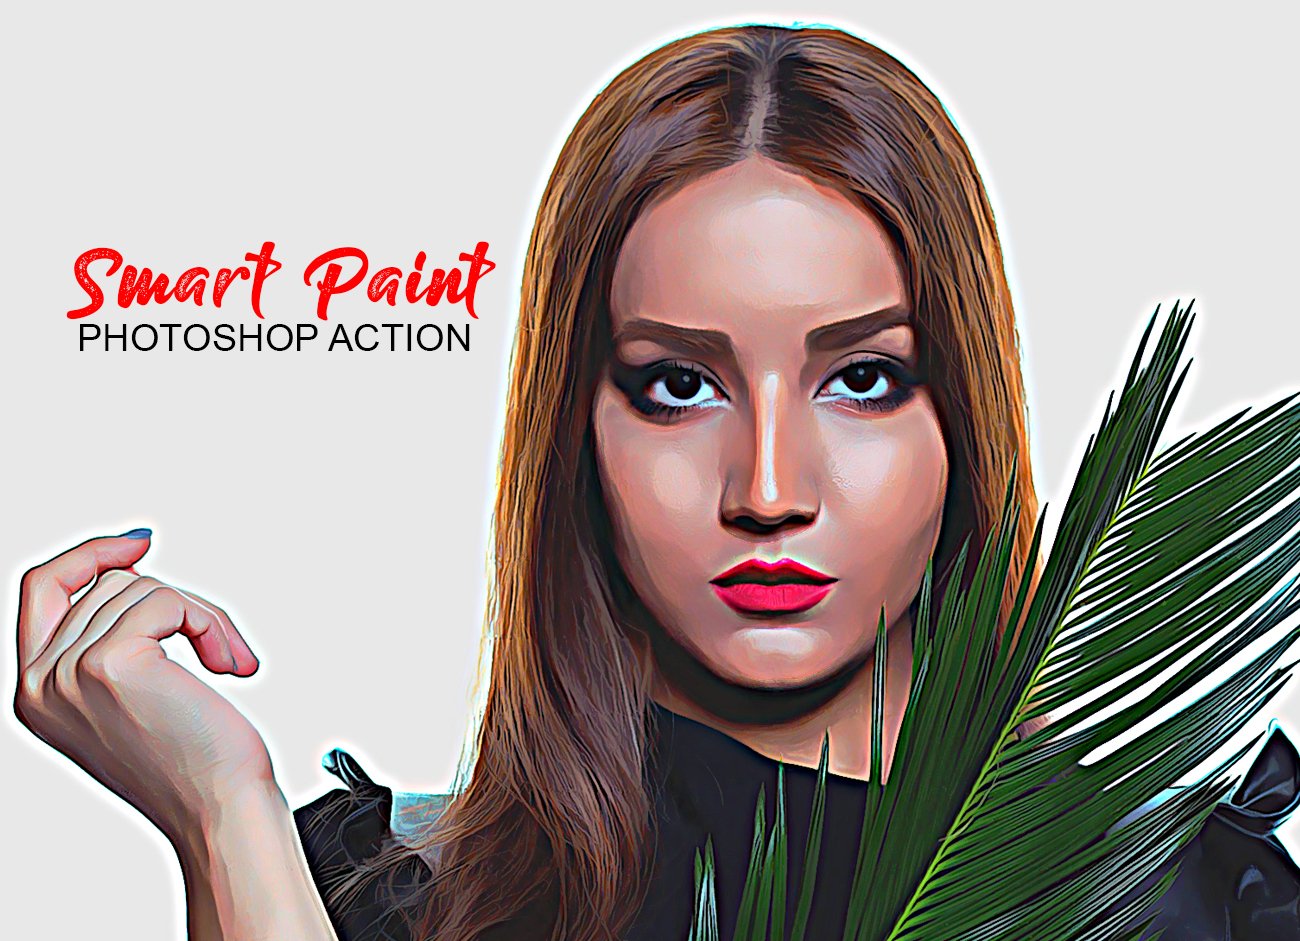 Smart Paint Photoshop Actioncover image.